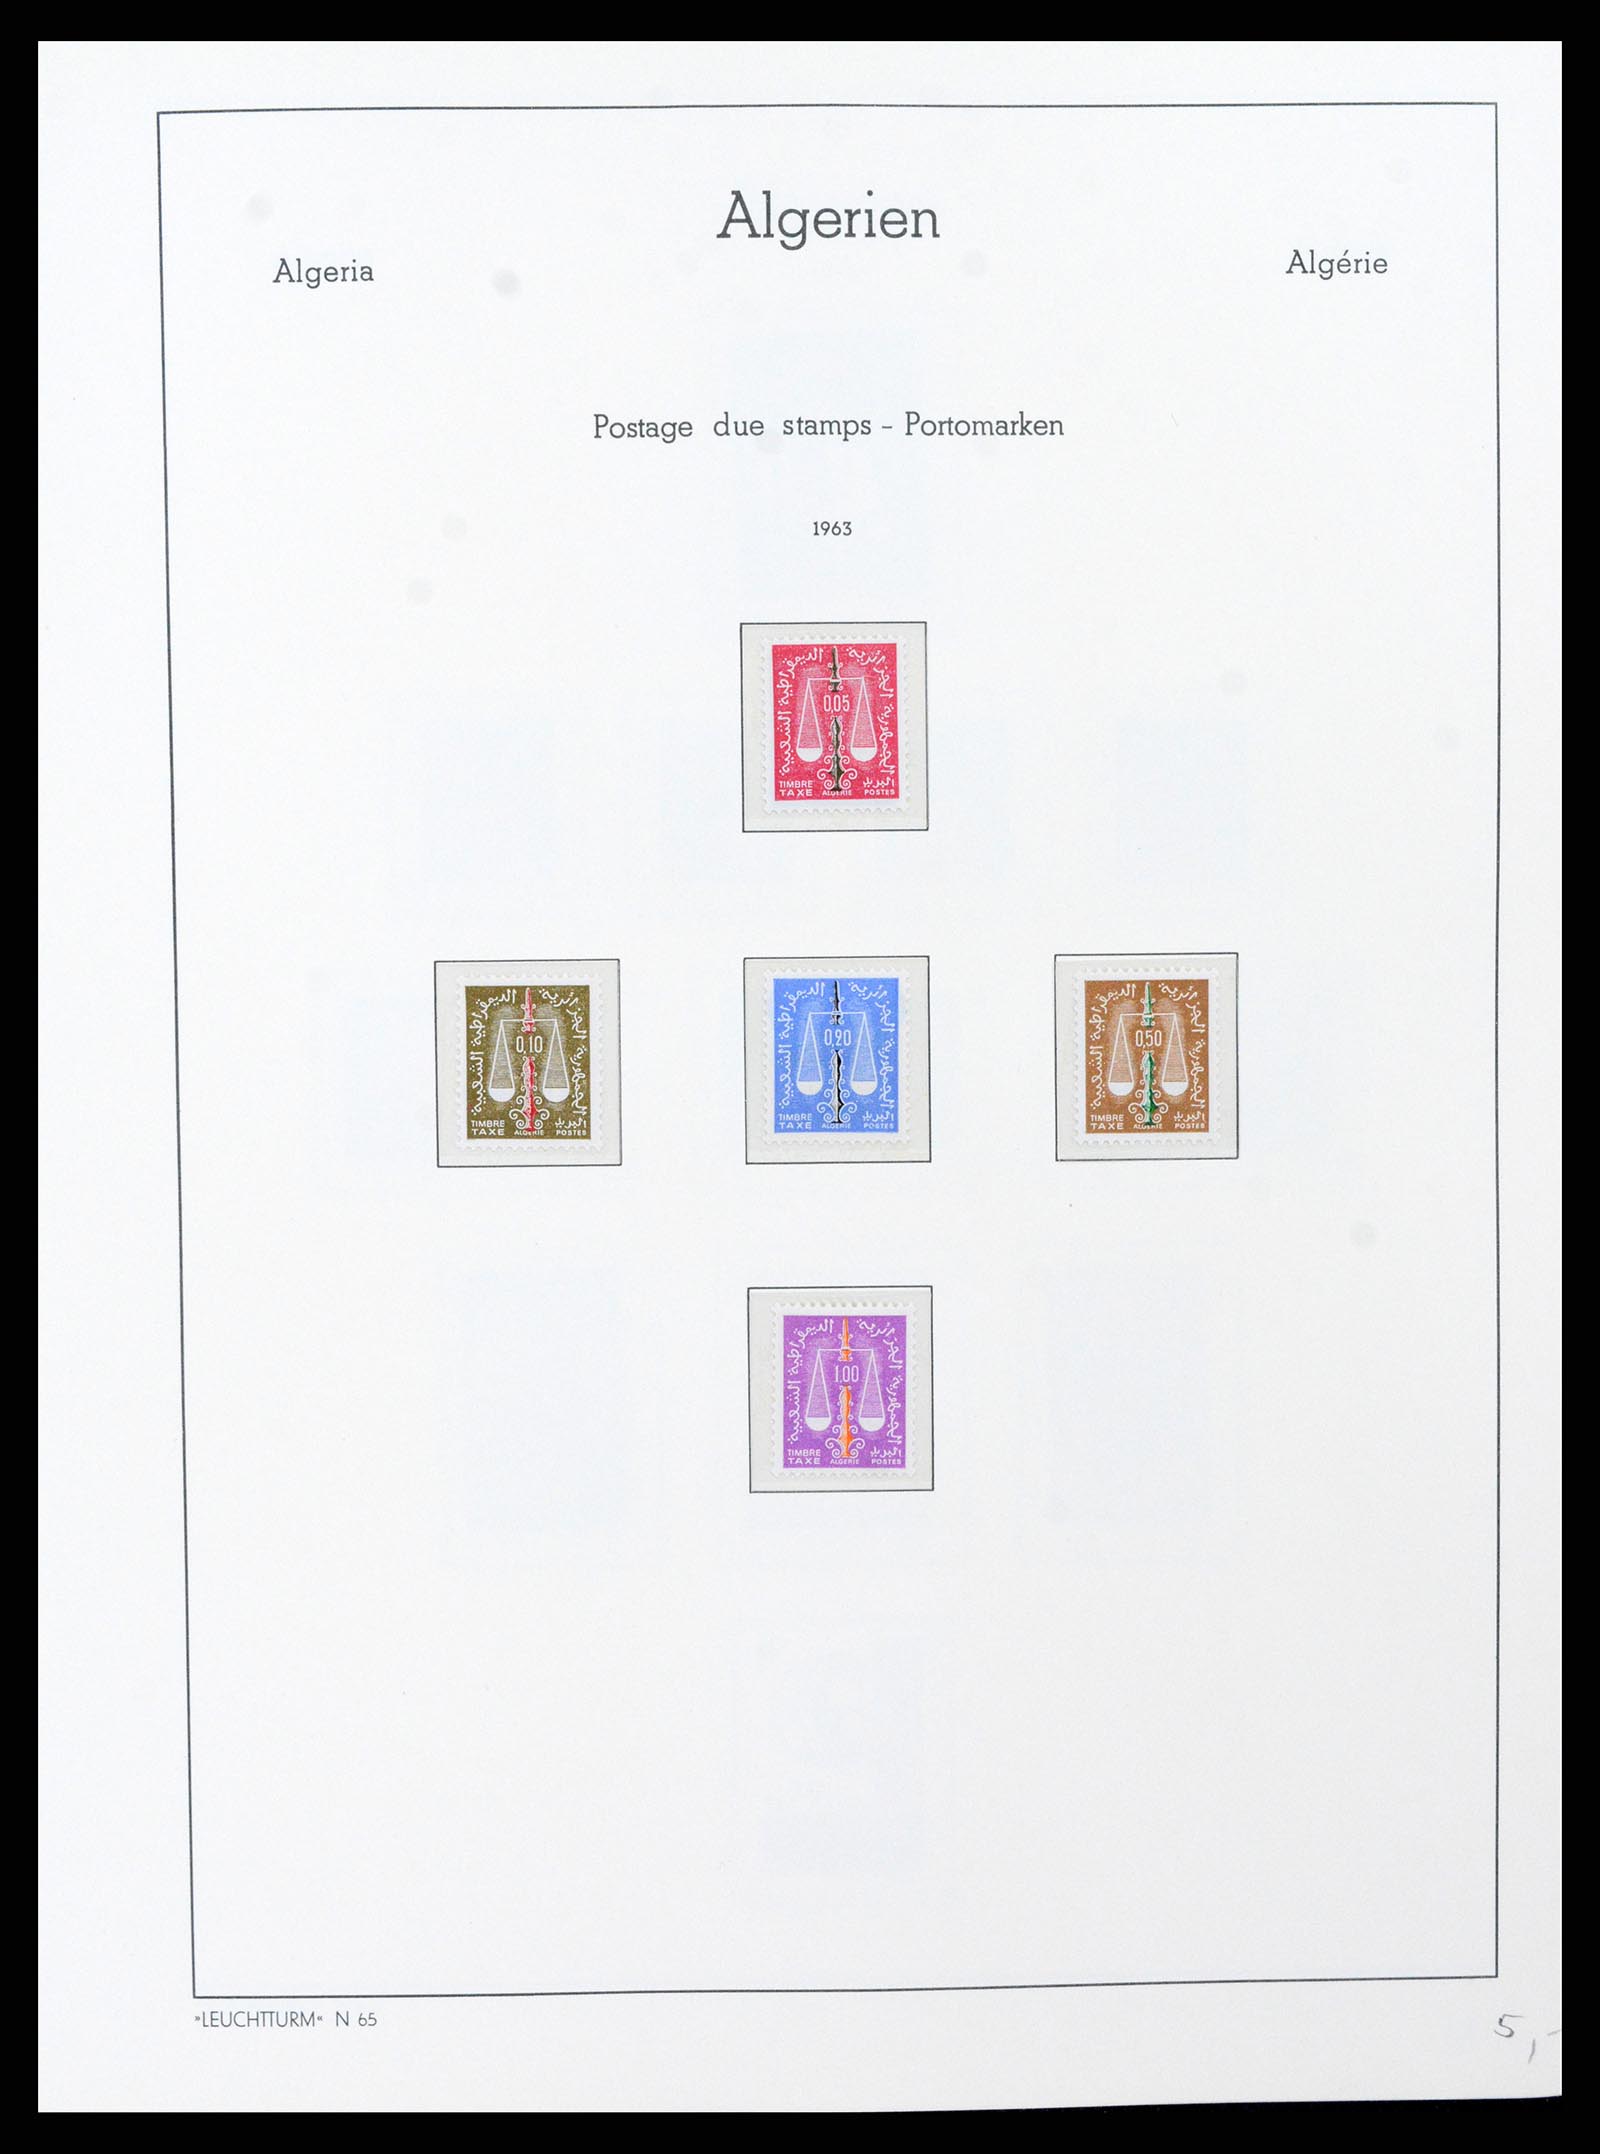 37532 030 - Stamp collection 37532 Algeria 1924-1985.